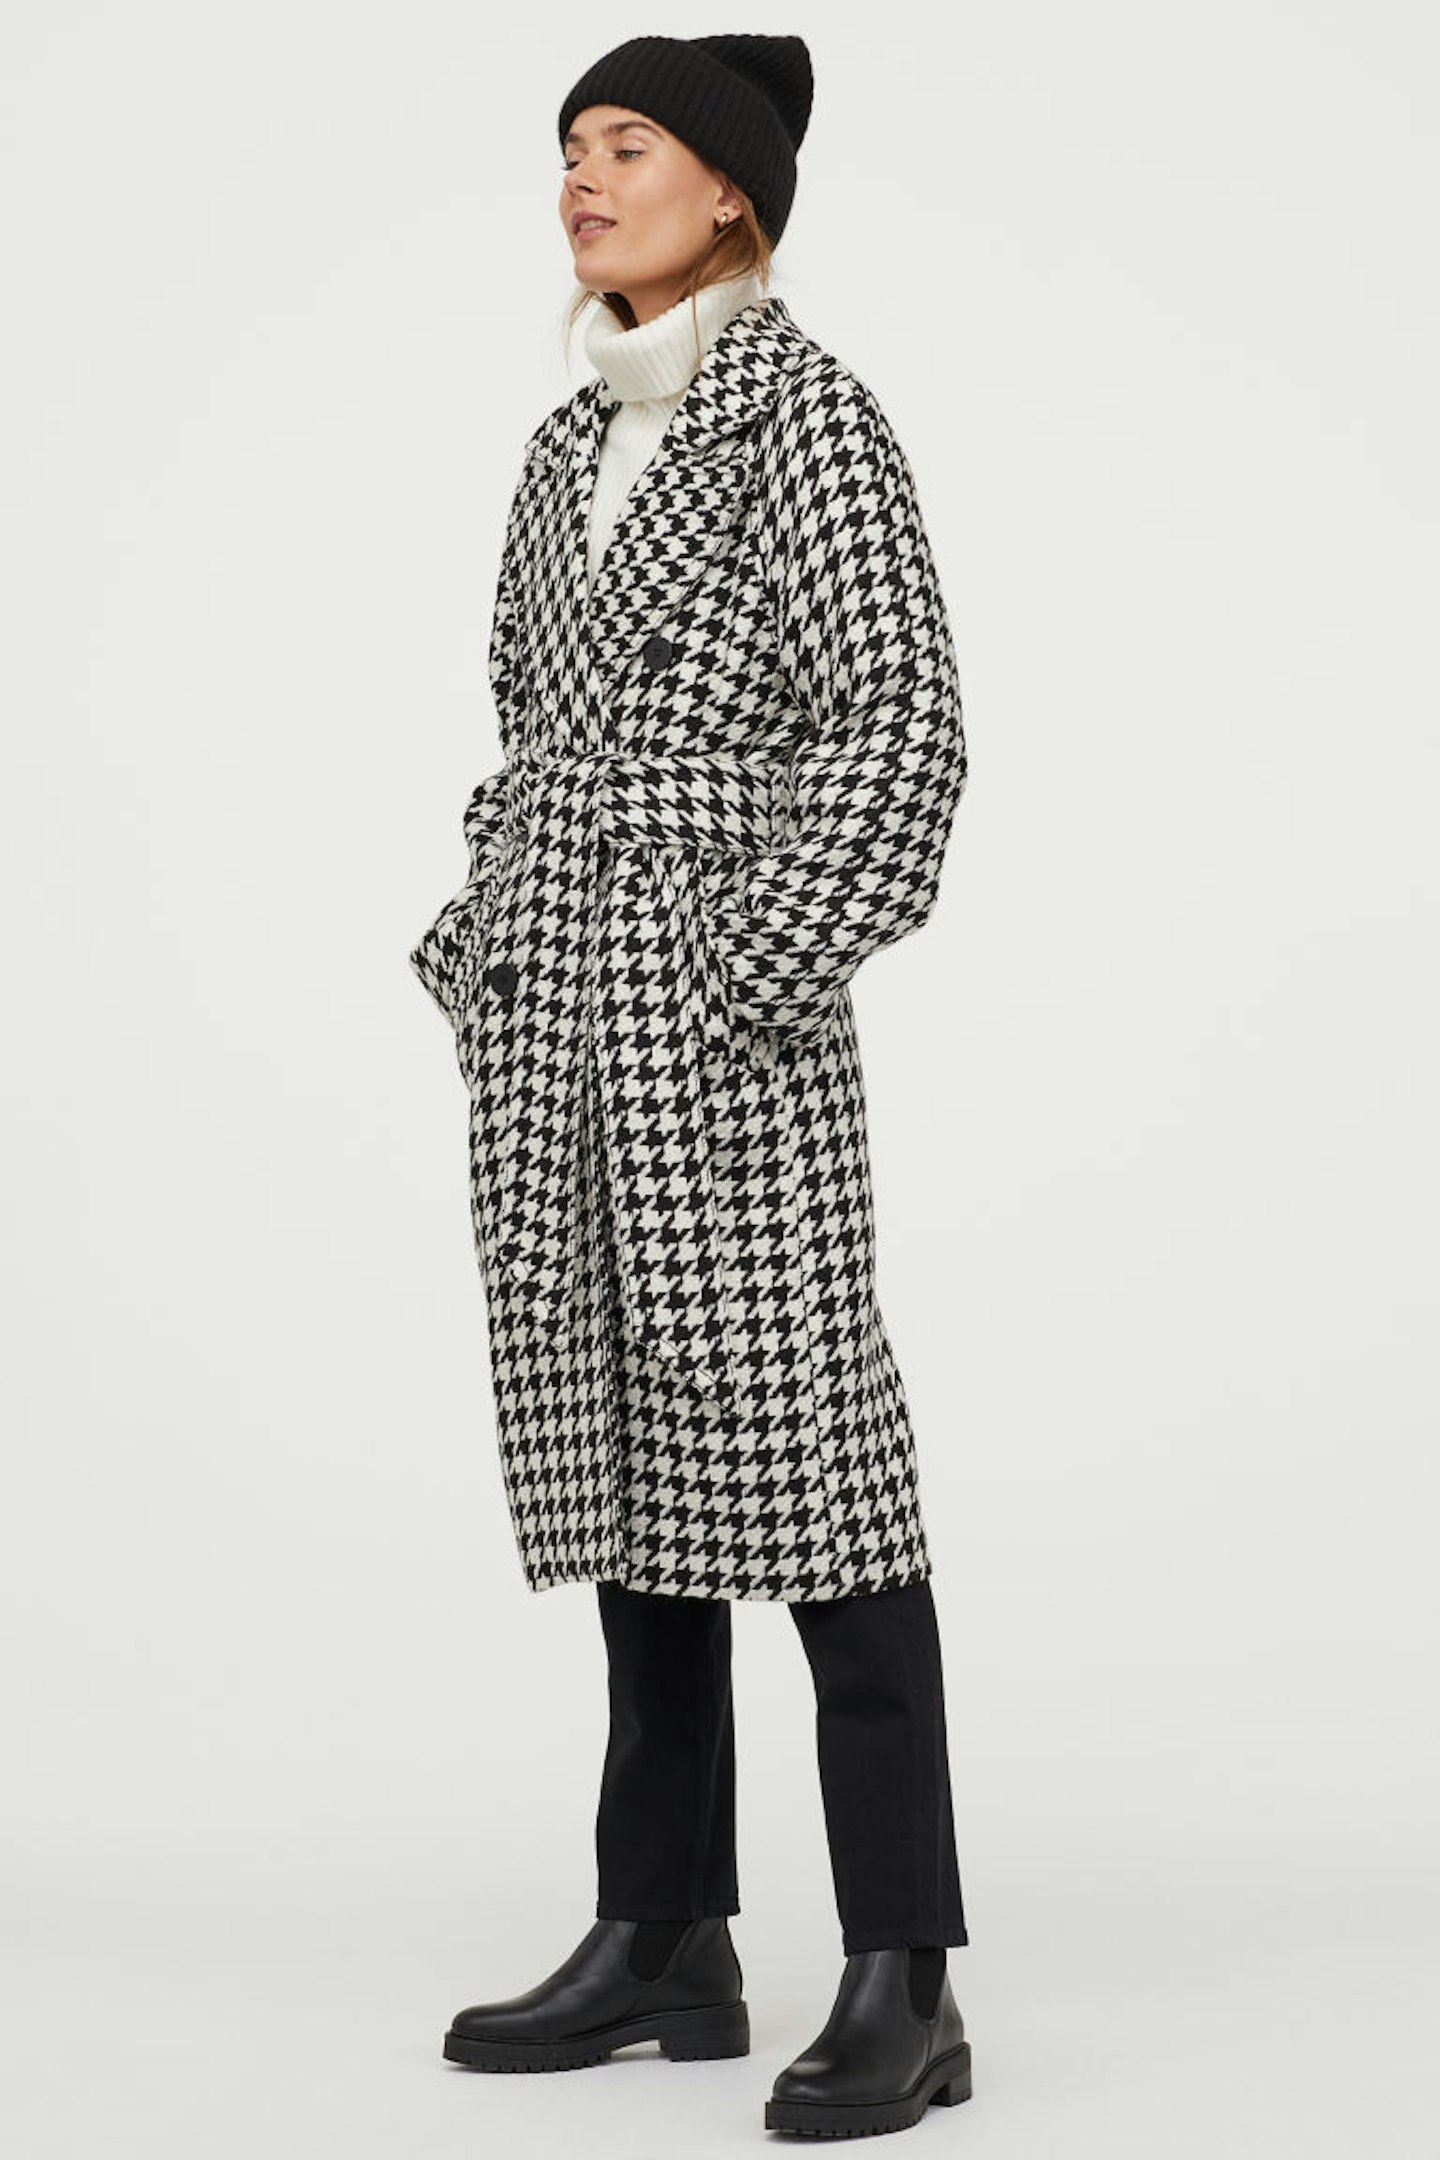 H&M, Houndstooth Coat, £69.99